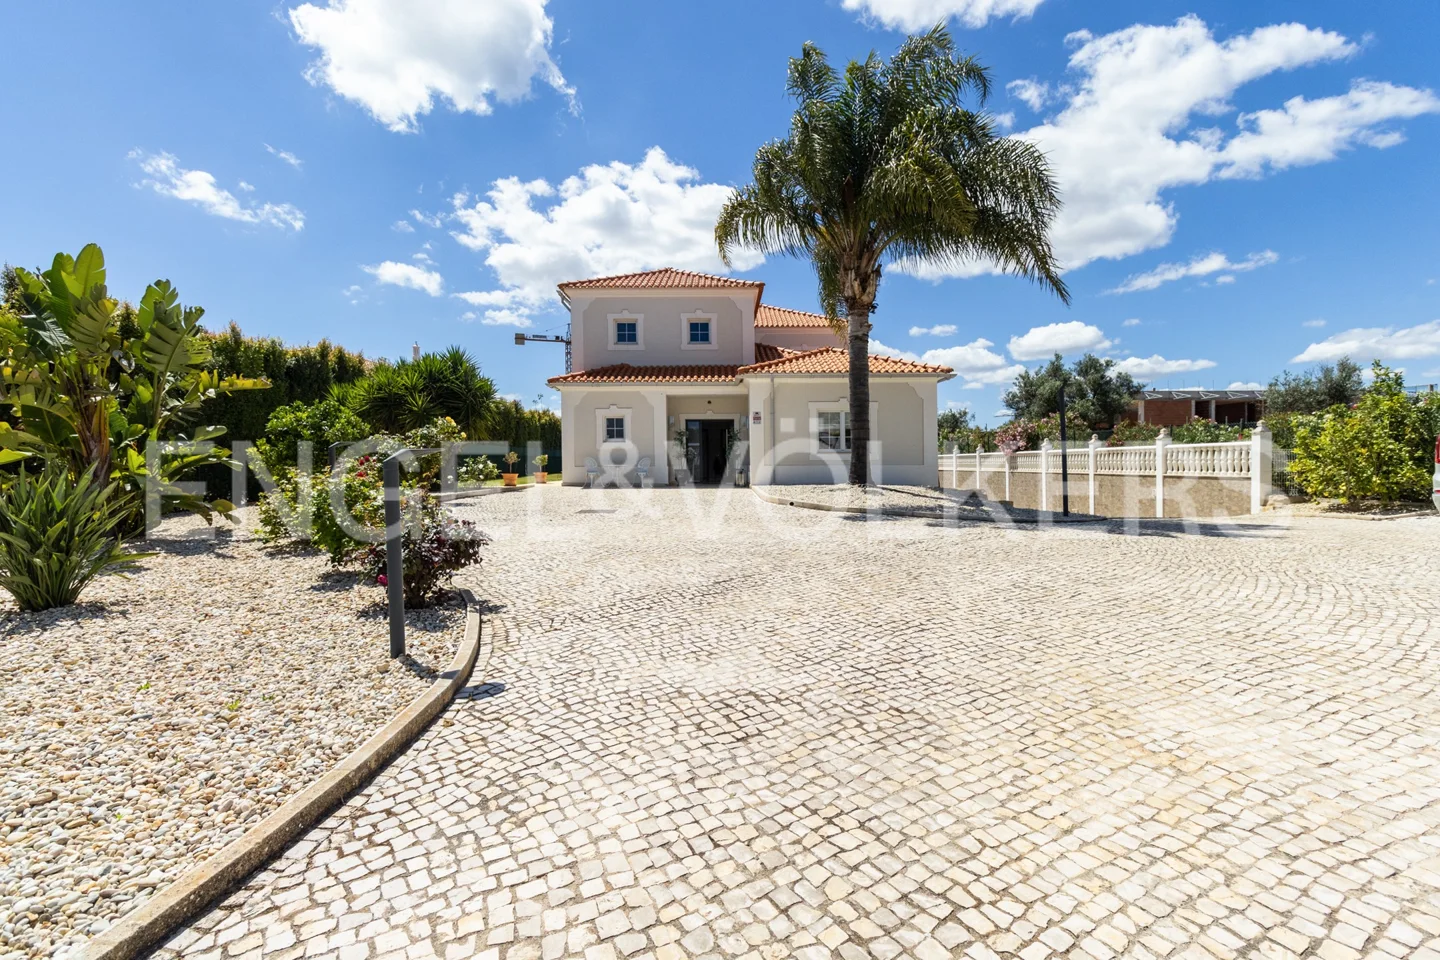 Magnificent detached villa in the prestigious Quintinhas area of Vilamoura